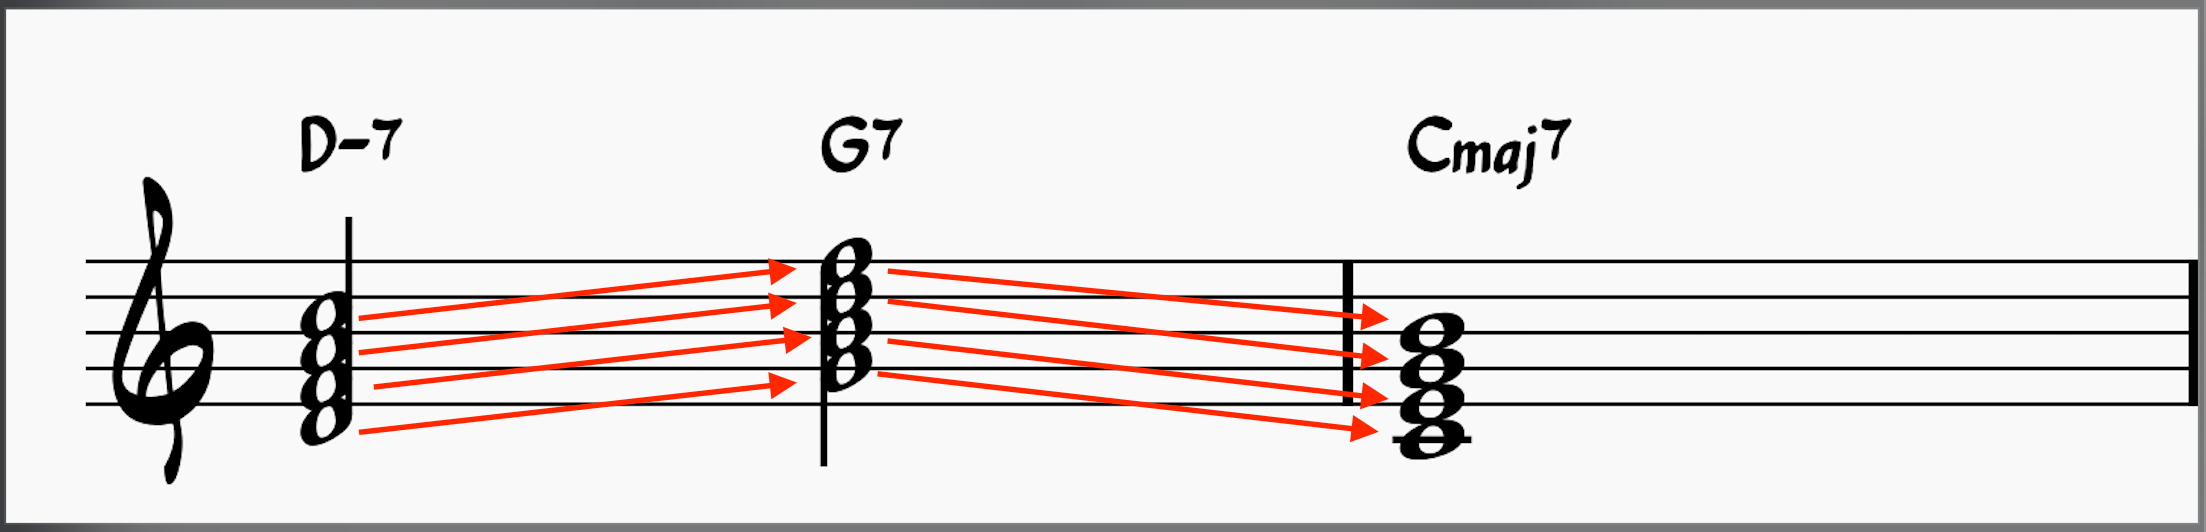 Root position ii-V-I progression